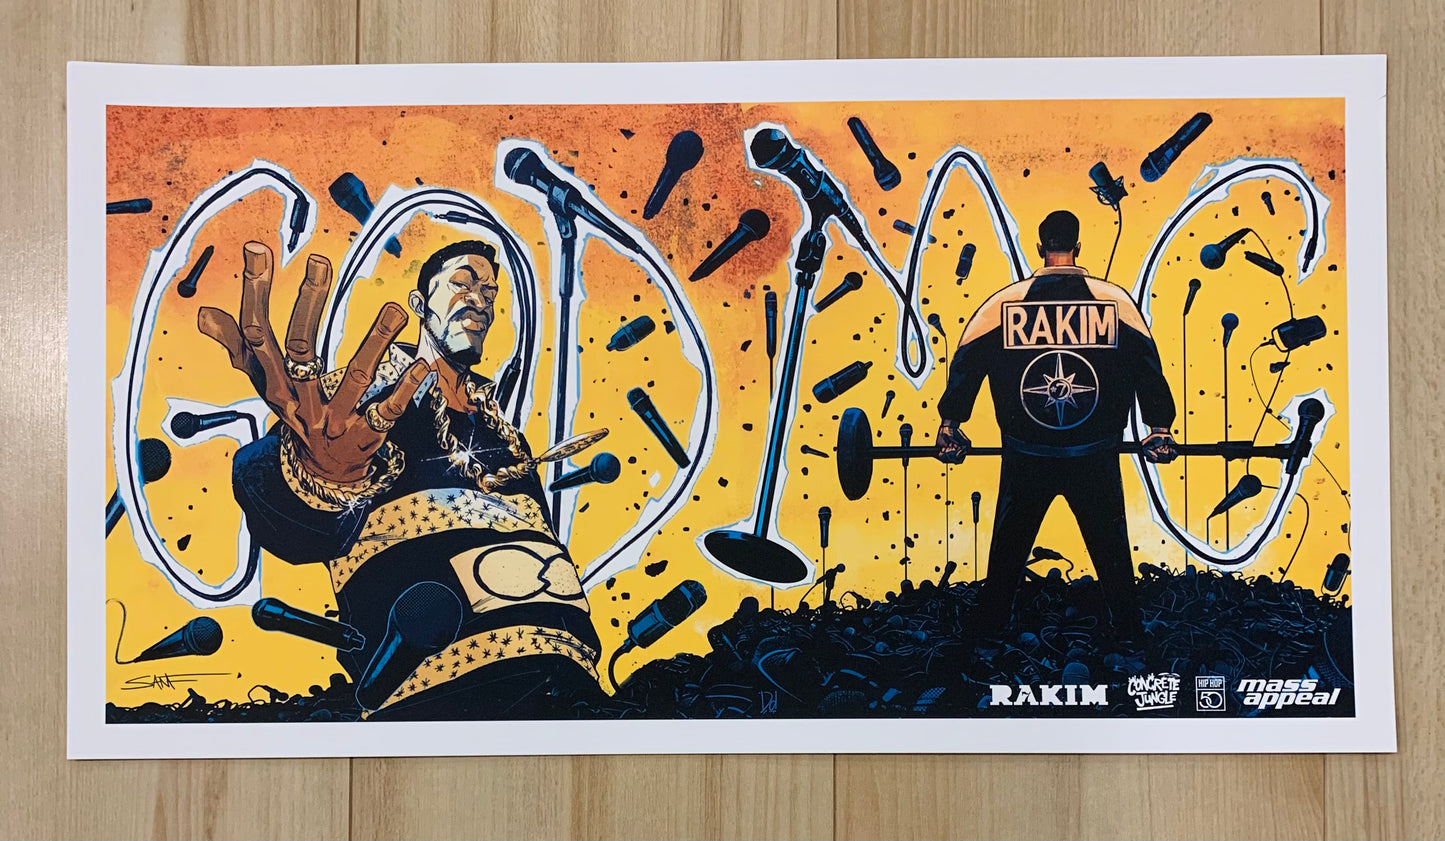 Rakim Artist Proof Print 17” x 9” SIGNED